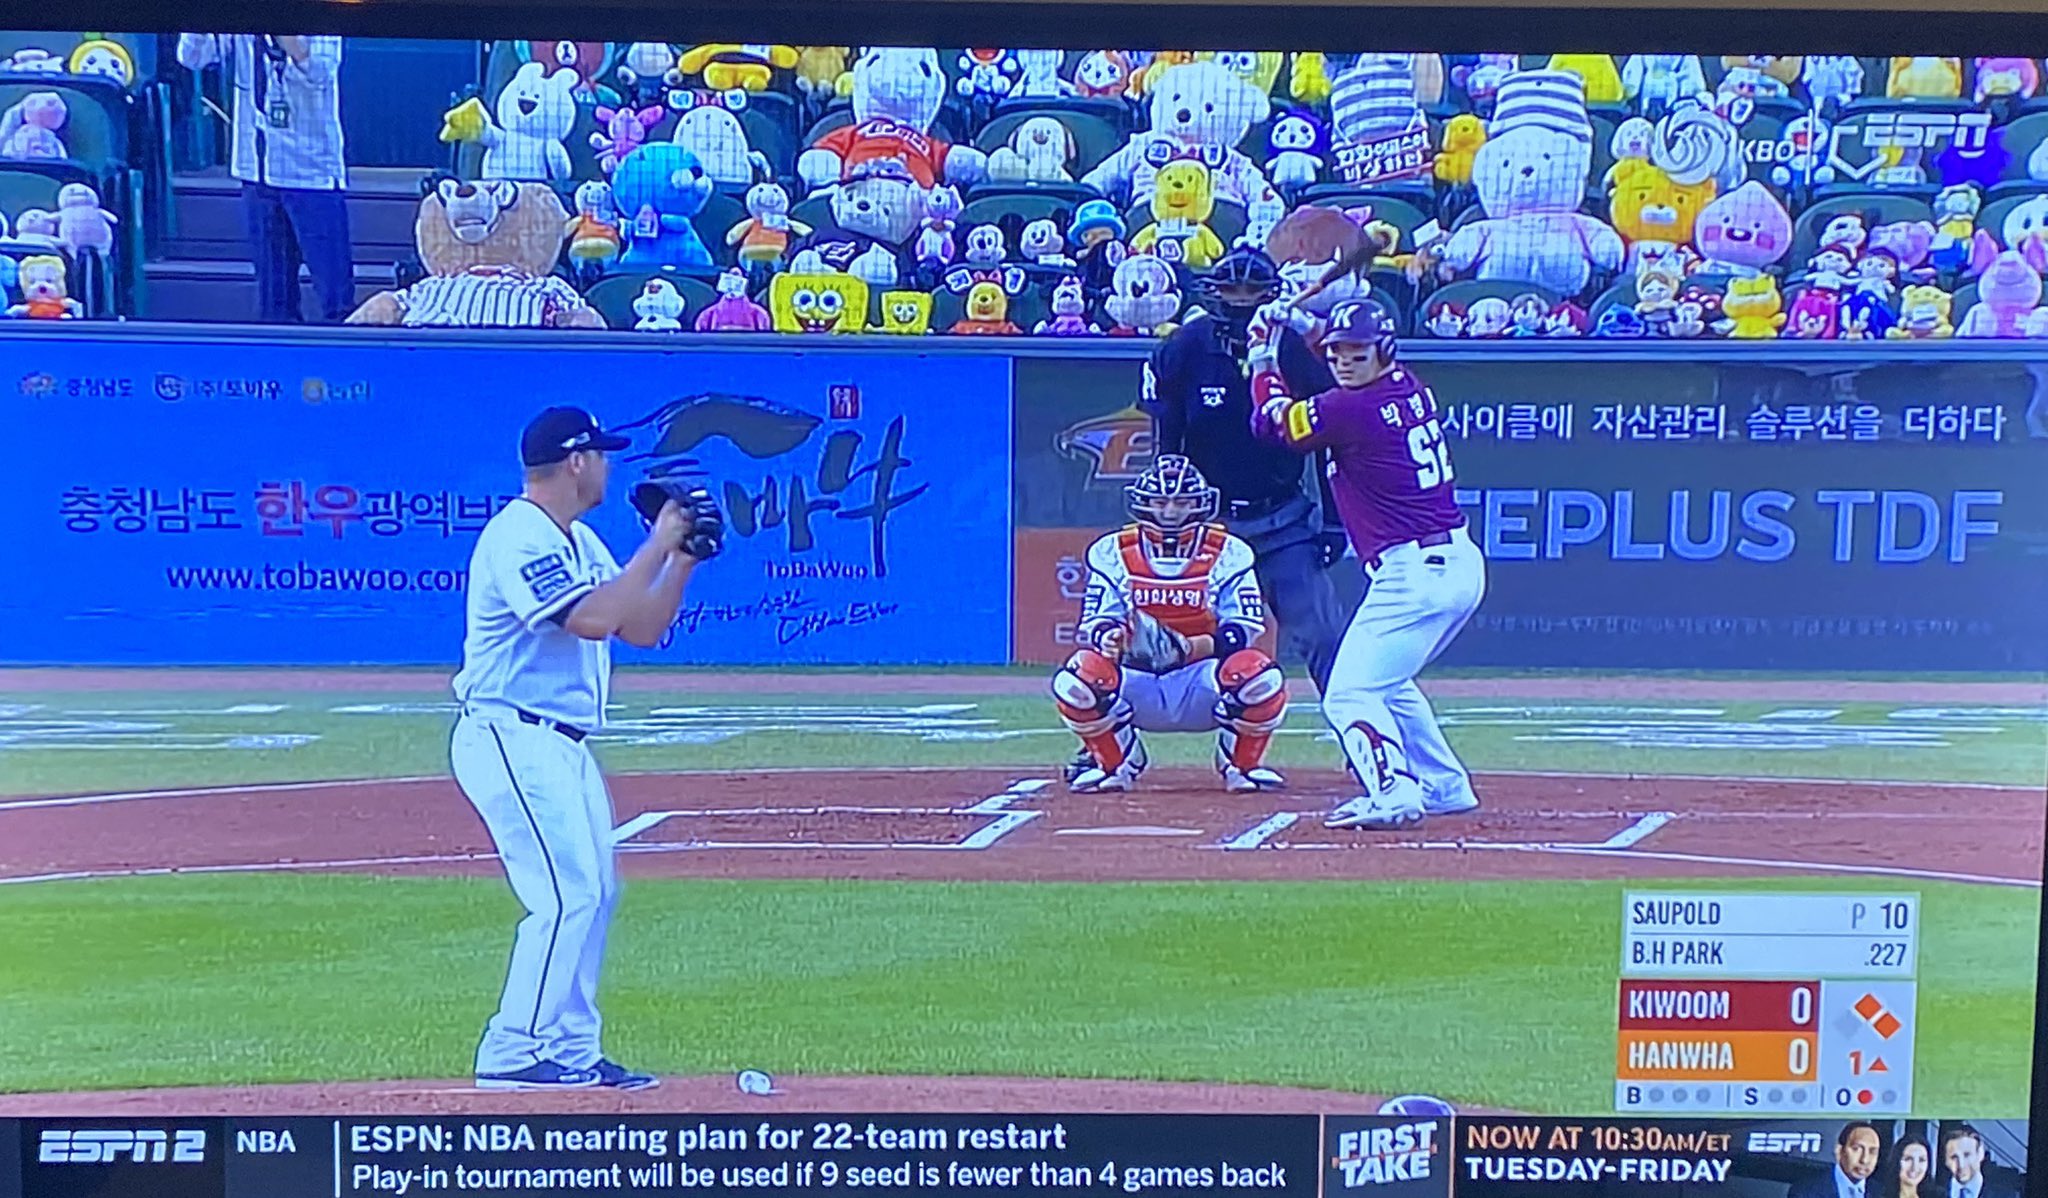 snack Dodge væv Nicholas Ferroni on Twitter: "Korean Baseball is pretty epic. #korean @espn  https://t.co/vx1f5jT1uU" / Twitter